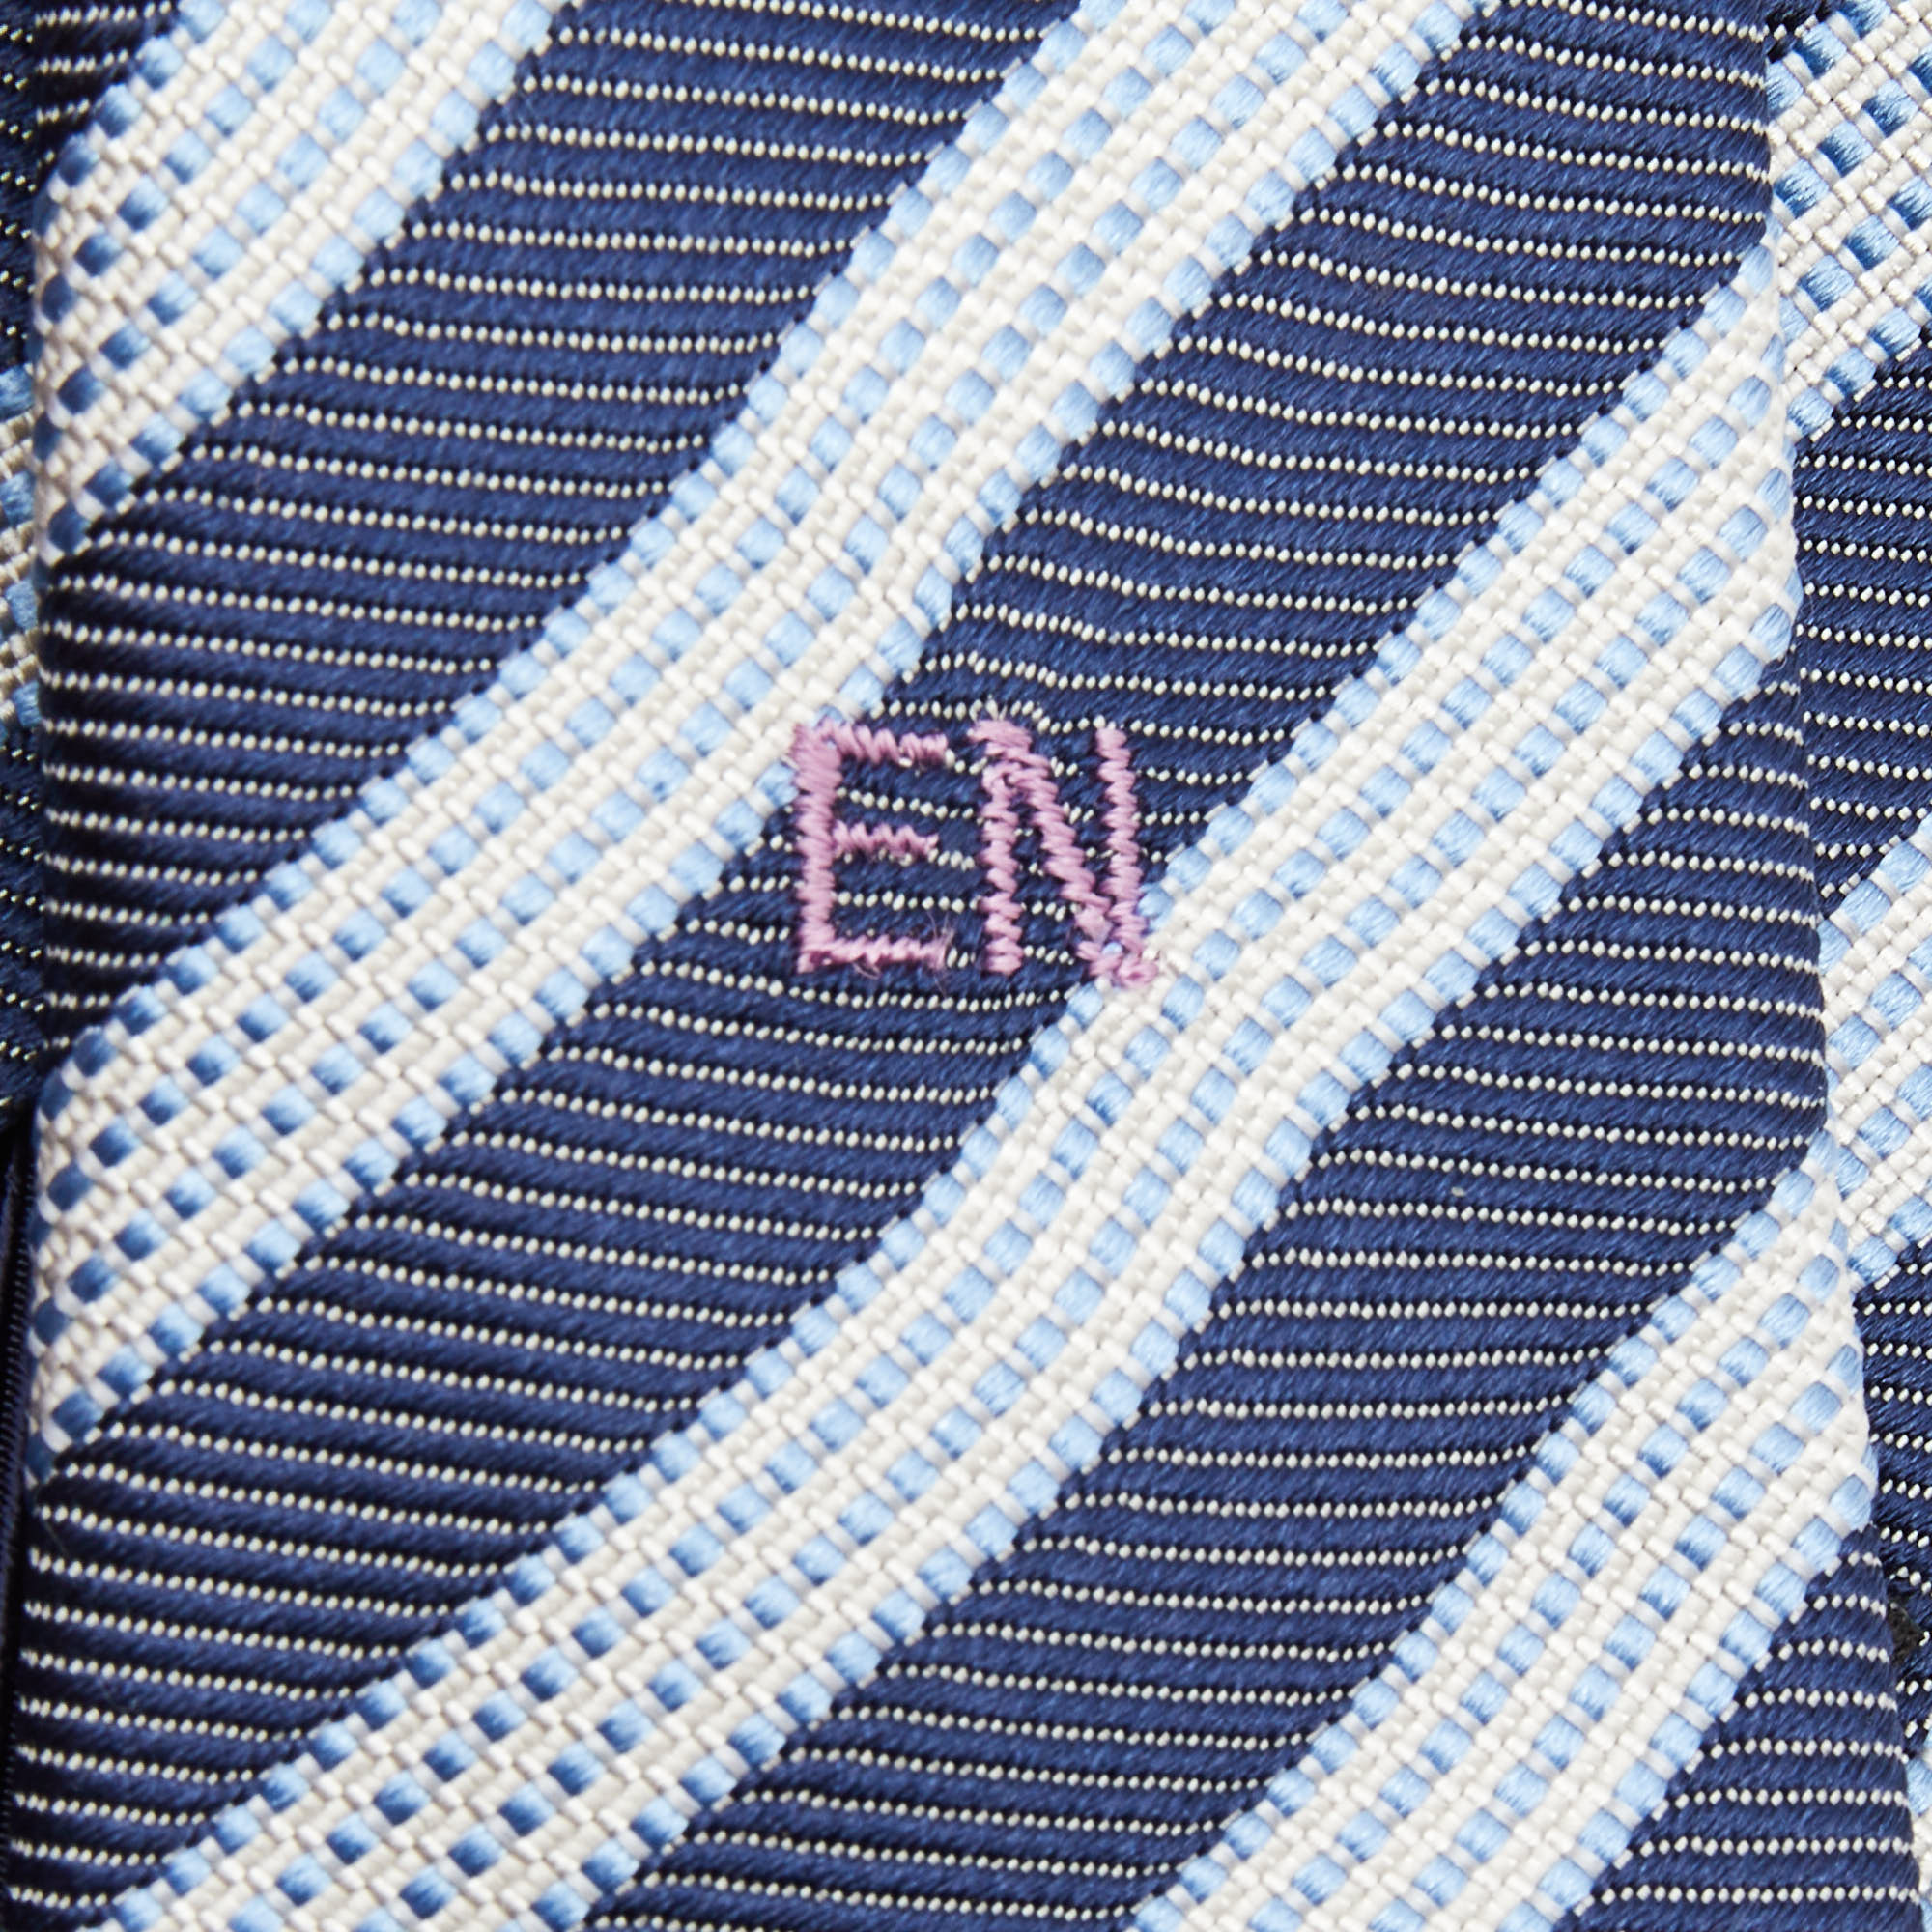 Ermenegildo Zegna Su Misura Blue Diagonal Stripe Patterned Silk Tie